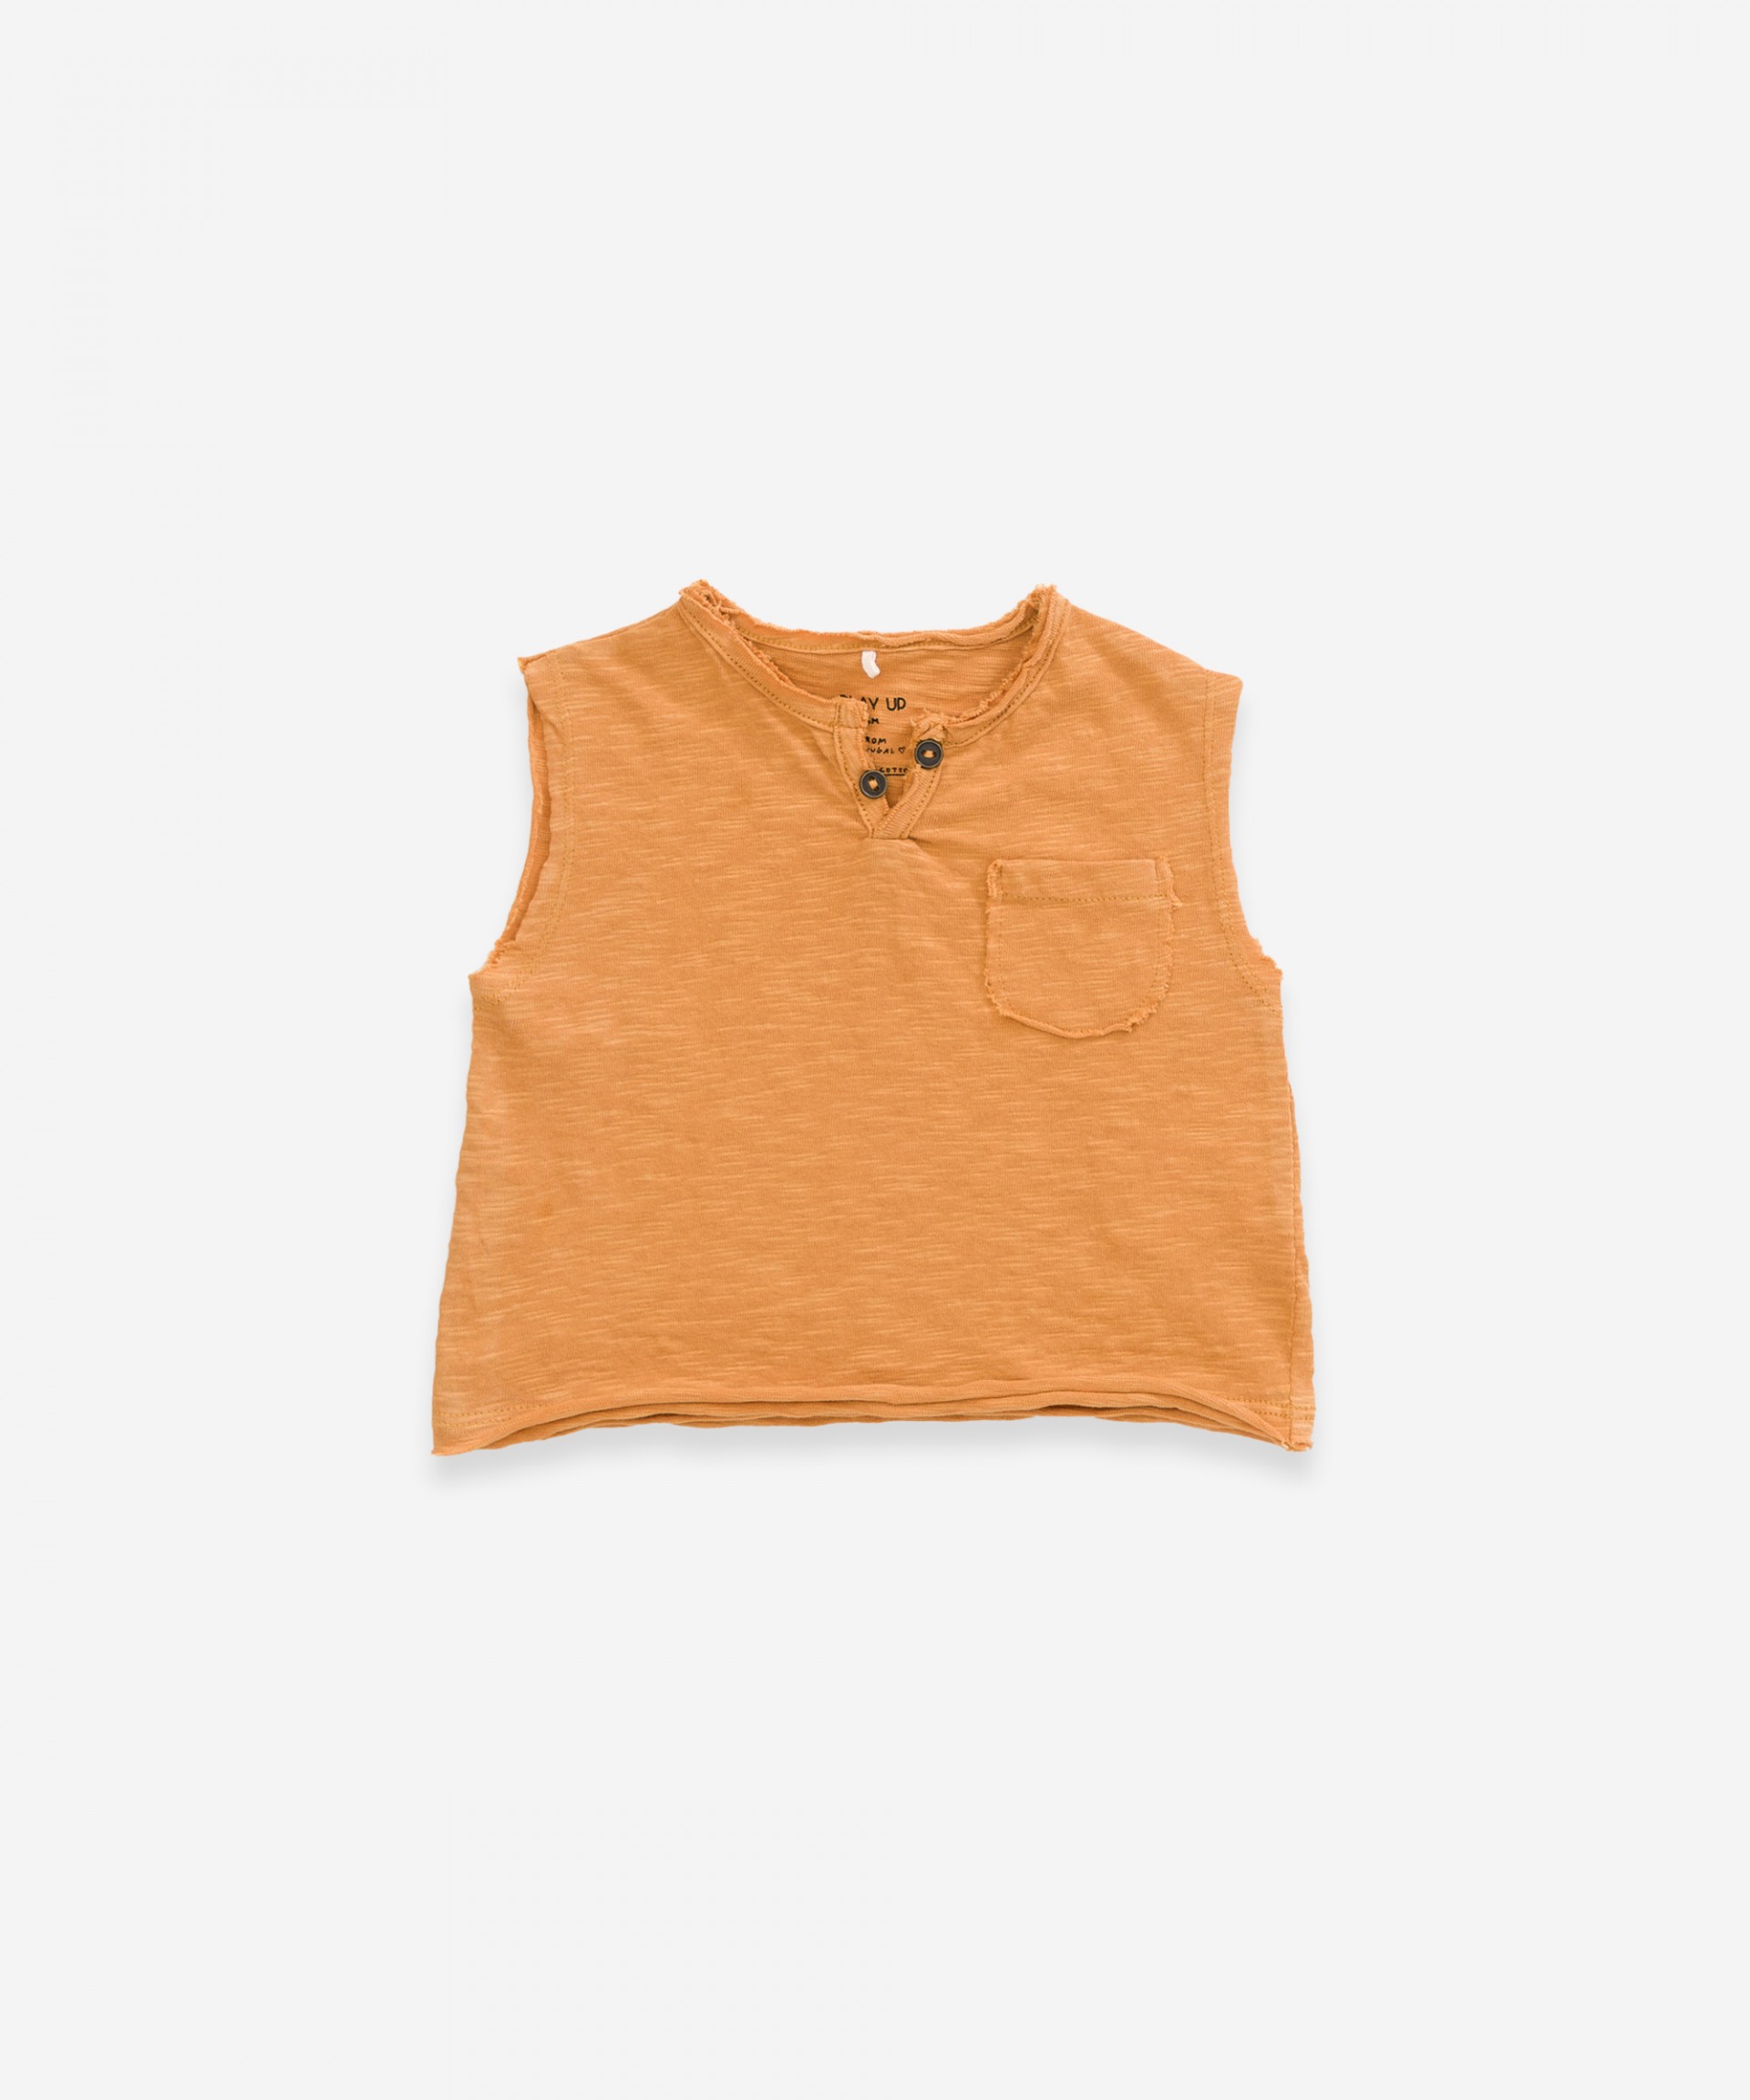 Camiseta sin mangas  de algodón orgánico| Weaving